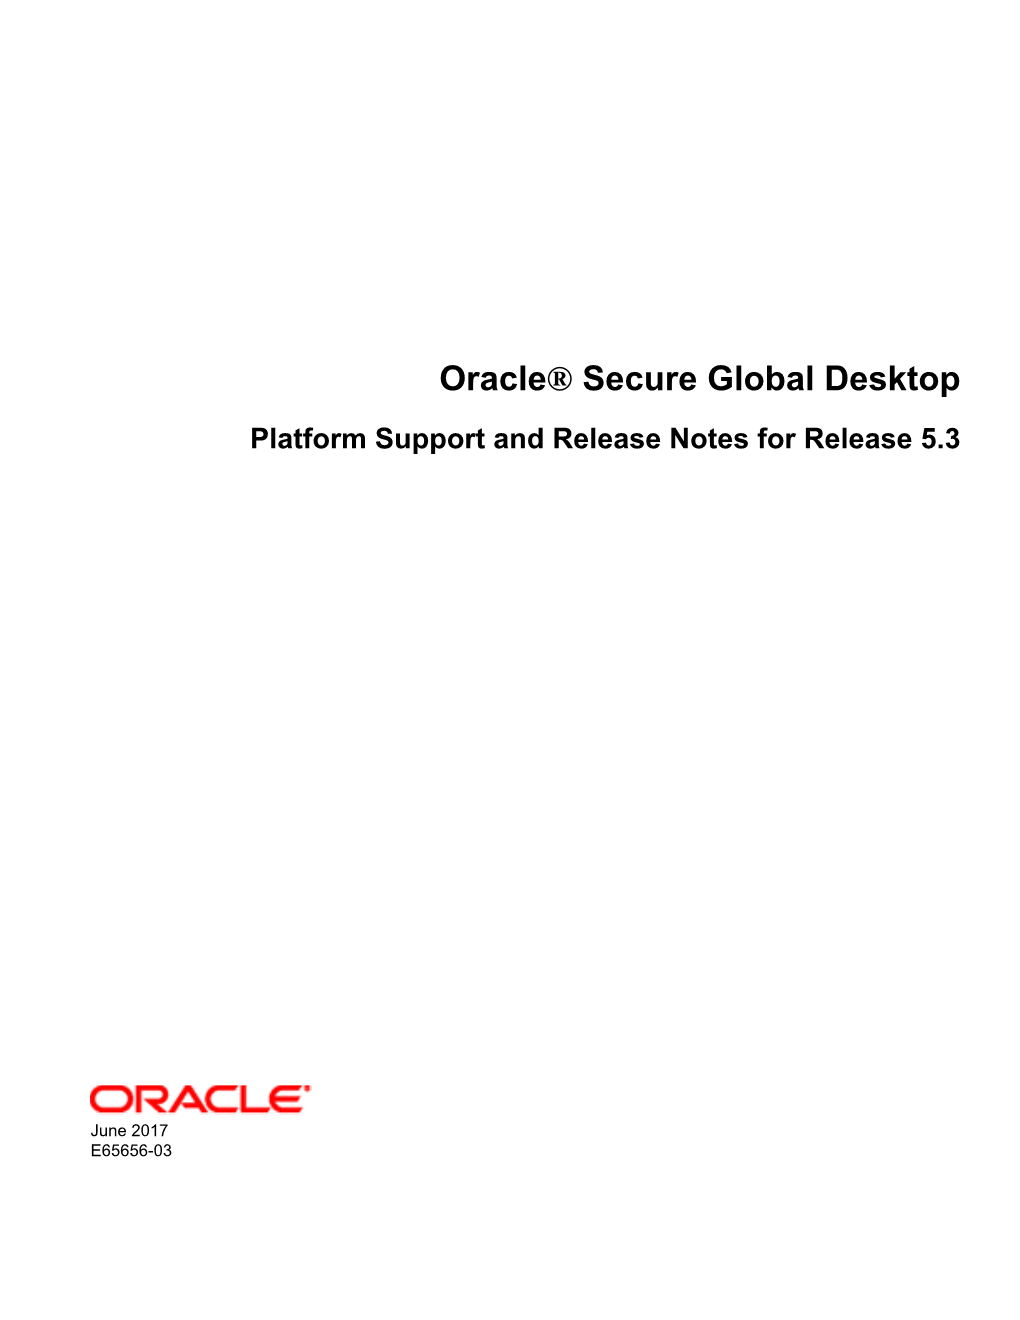 Oracle® Secure Global Desktop Platform Support and Release Notes for Release 5.3